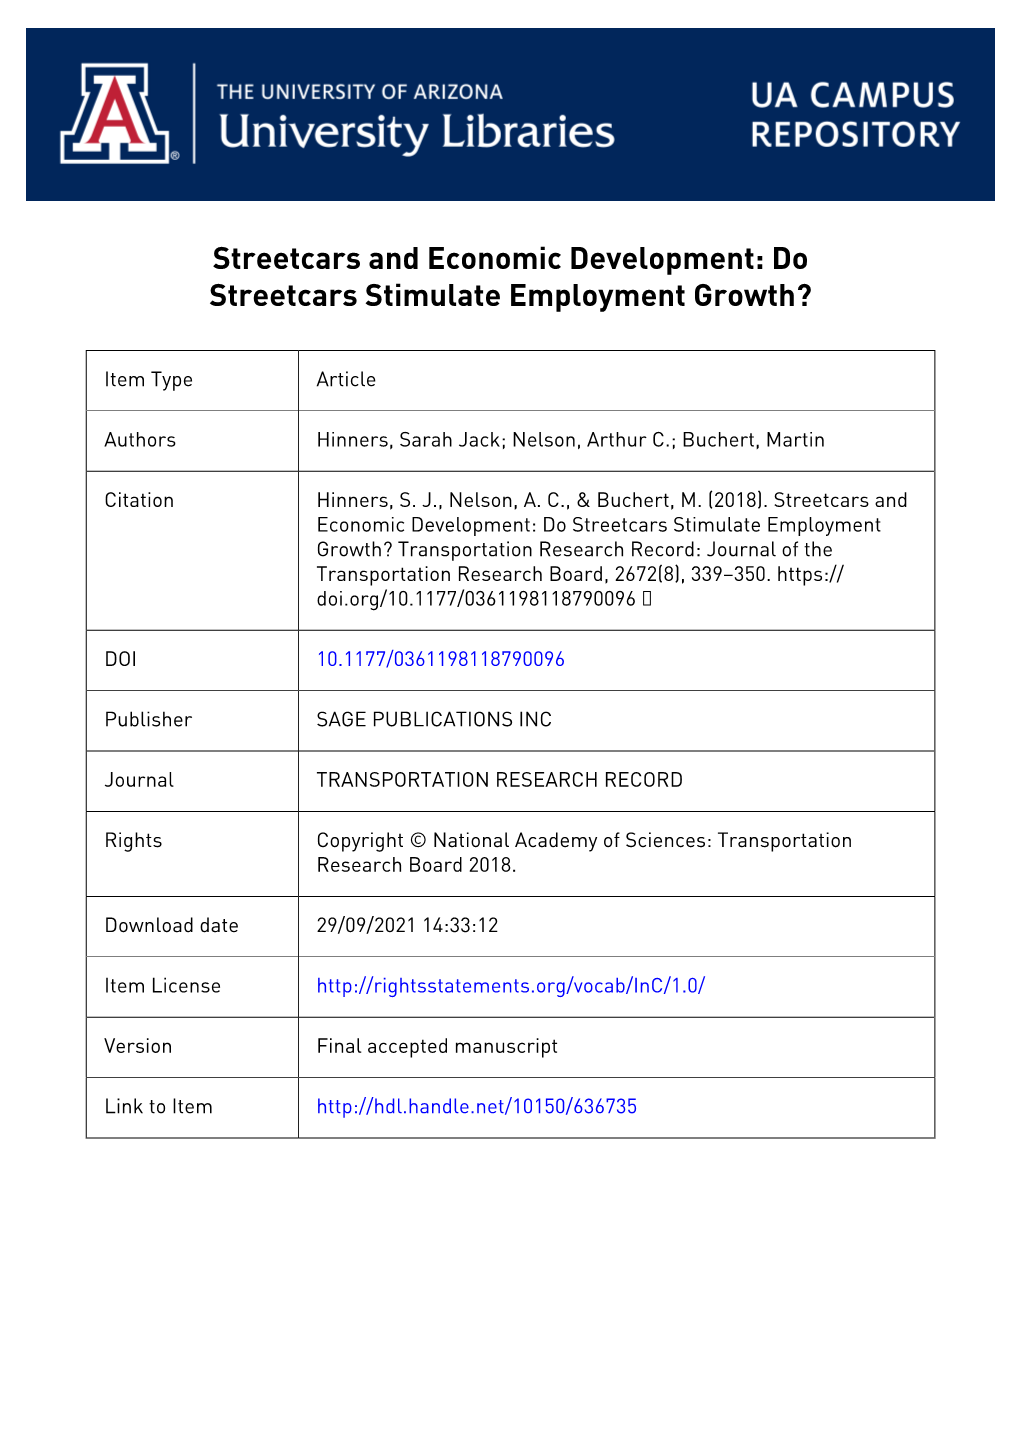 Streetcars and Economic Development: Do Streetcars Stimulate Employment Growth?